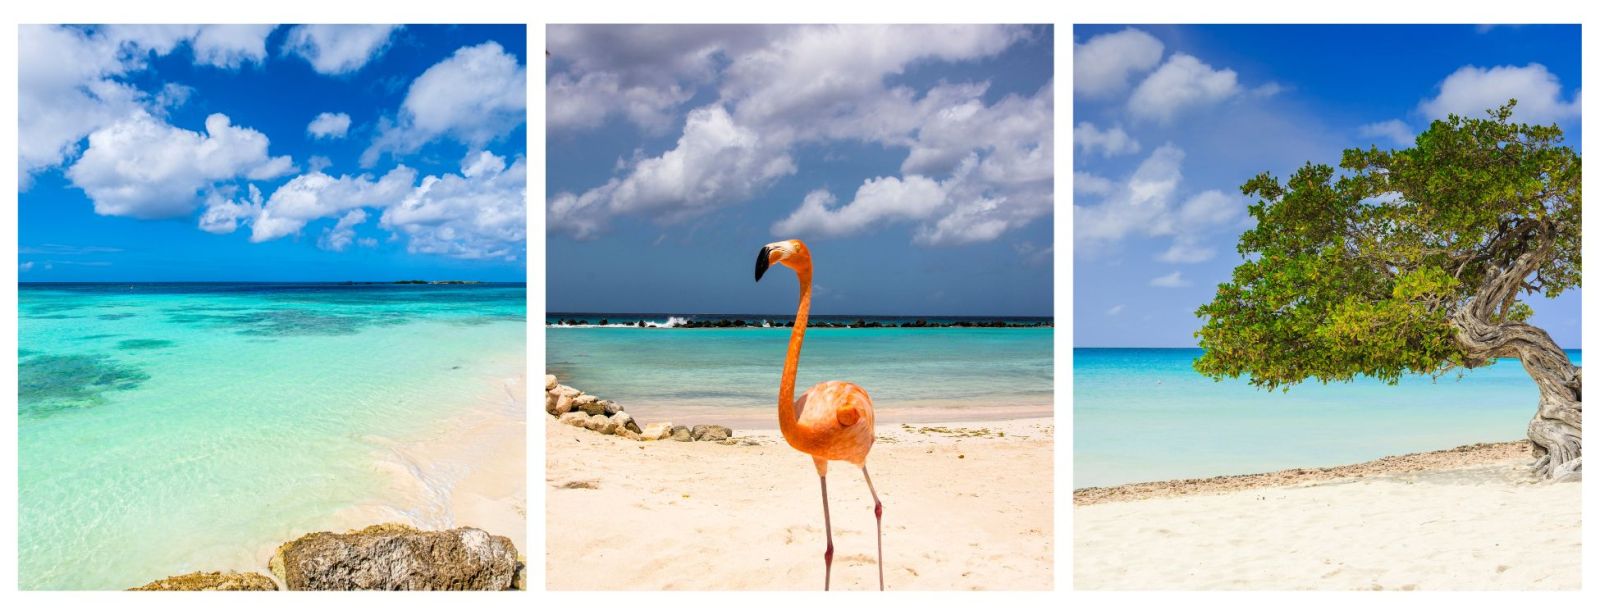 Aruba Honeymoons, Aruba Holidays, Aruba white sand beaches